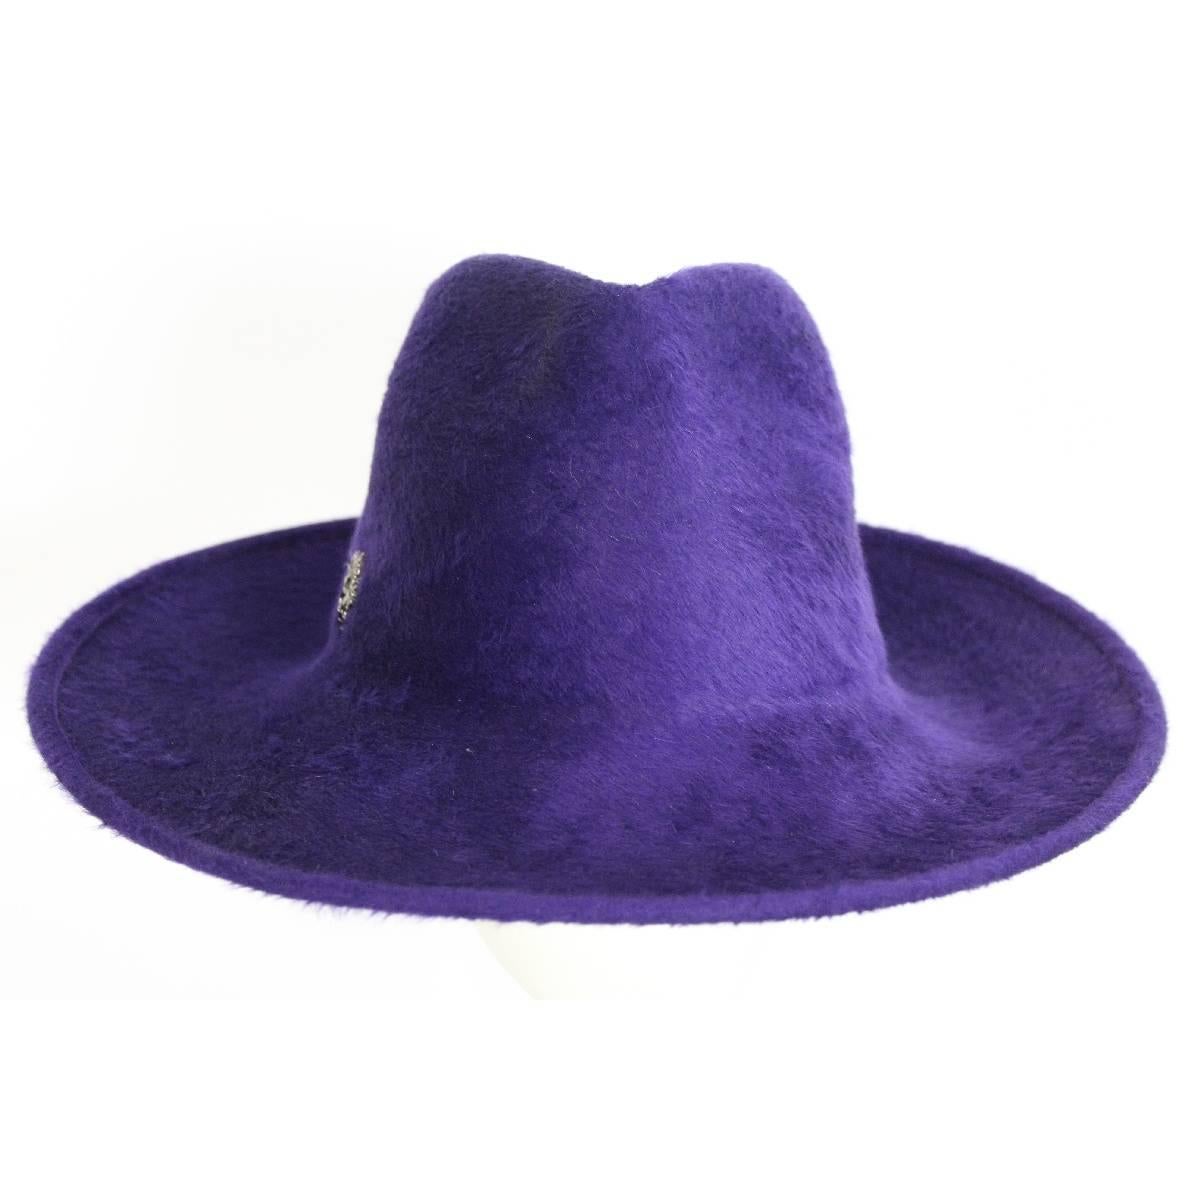 Purple Philip Treacy purple wool felt hat size M made England 